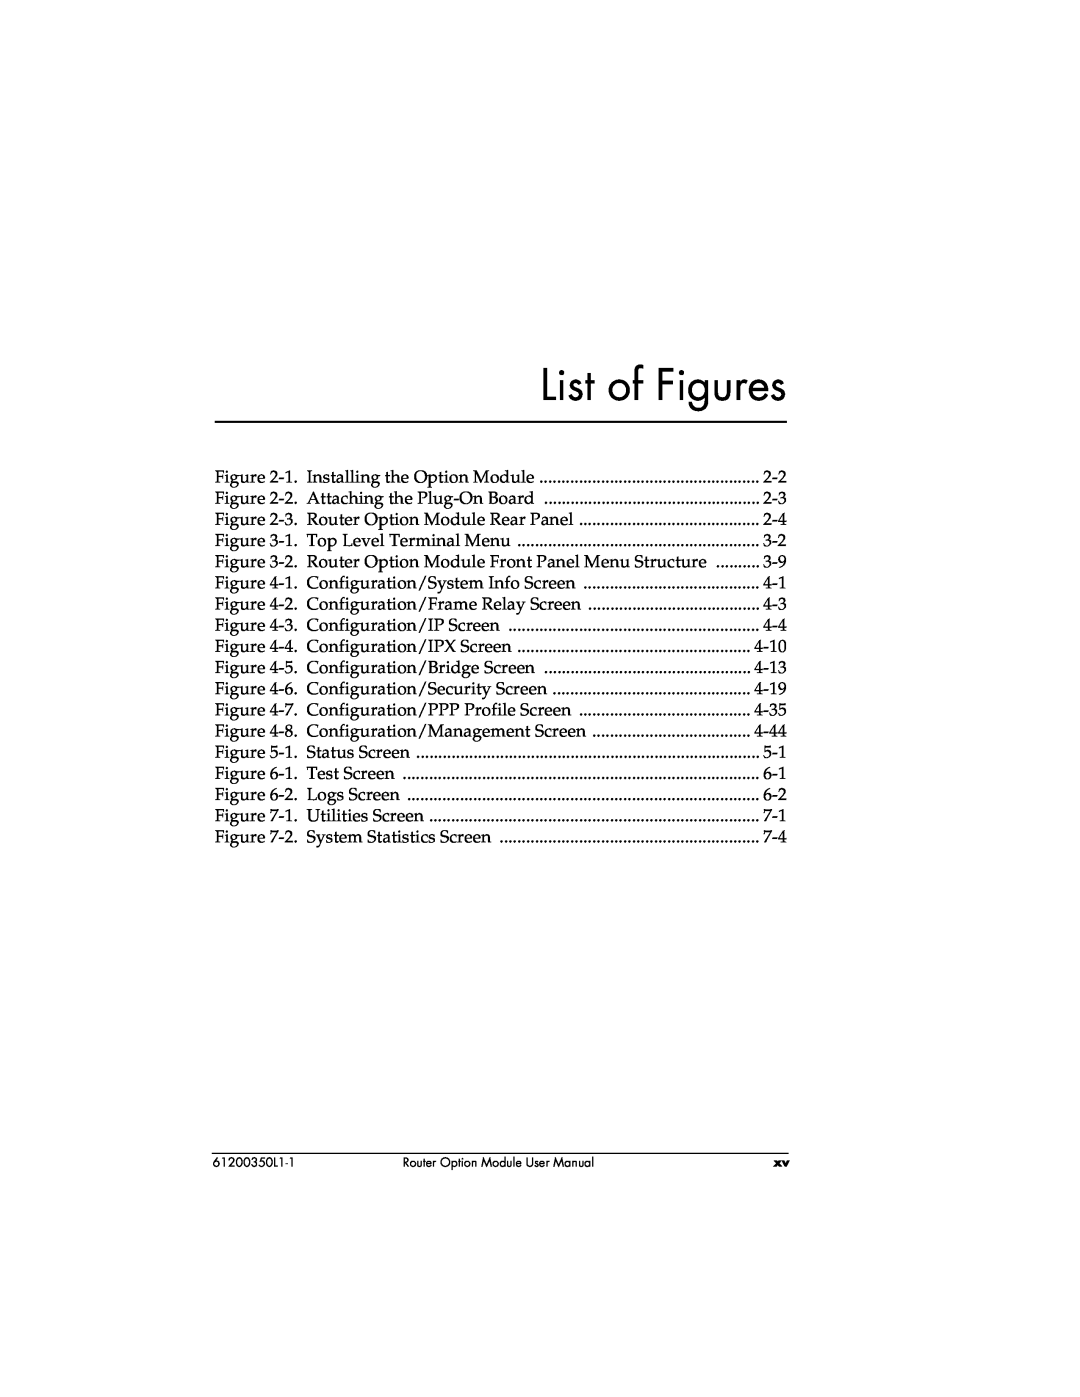 ADTRAN 1200350L1 user manual List of Figures 